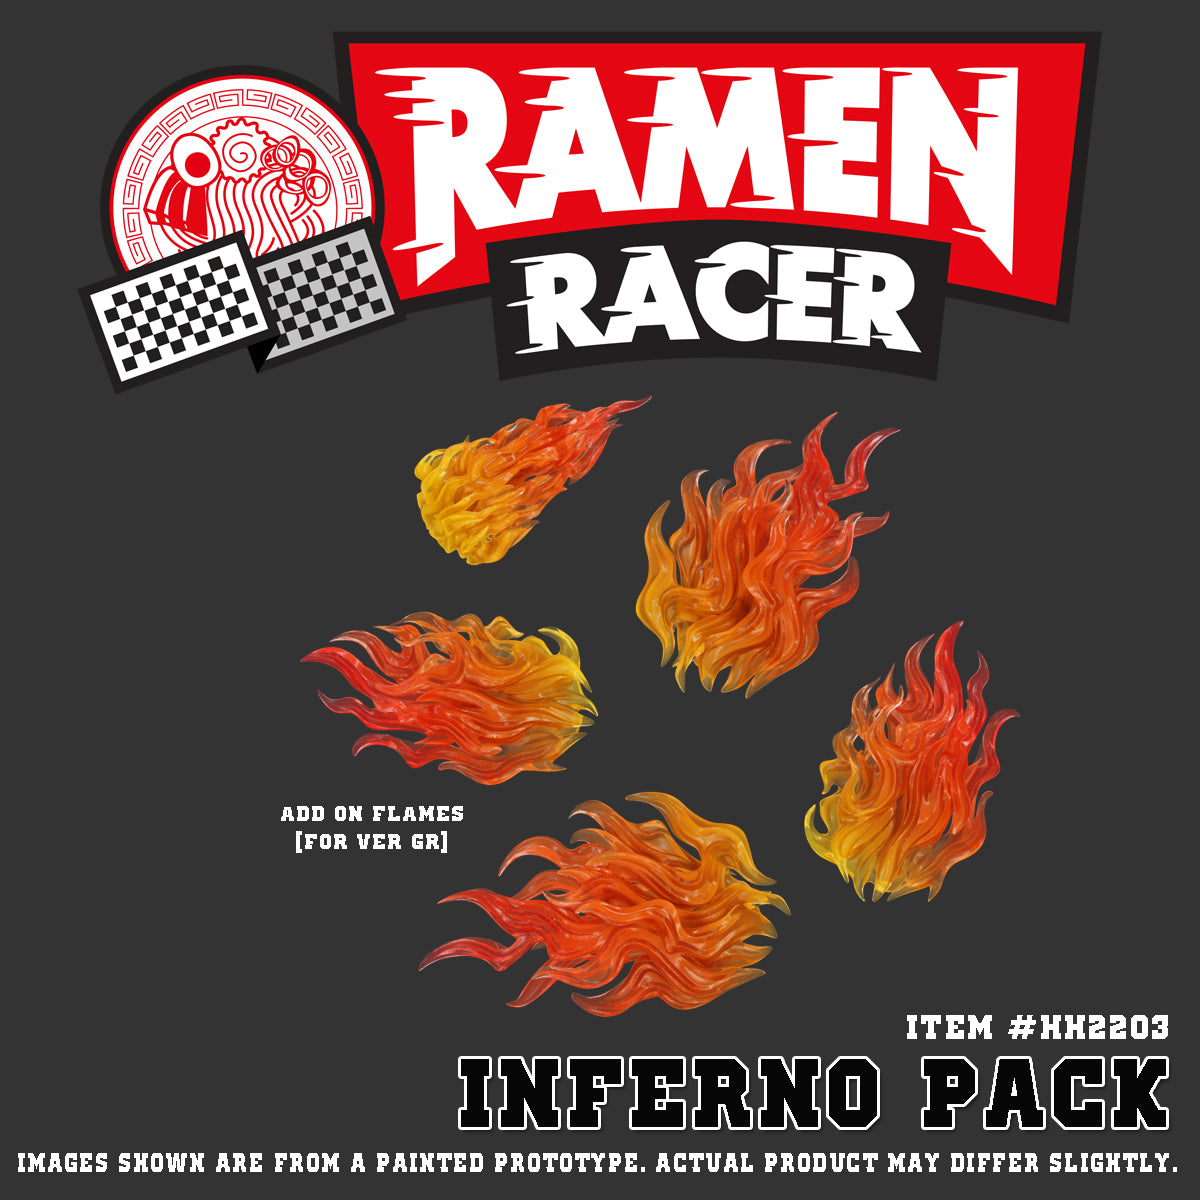 ITEM #HH2201 - RAMEN RACER (GRAPHITE BLACK) (ADVANCE PRE-ORDER)